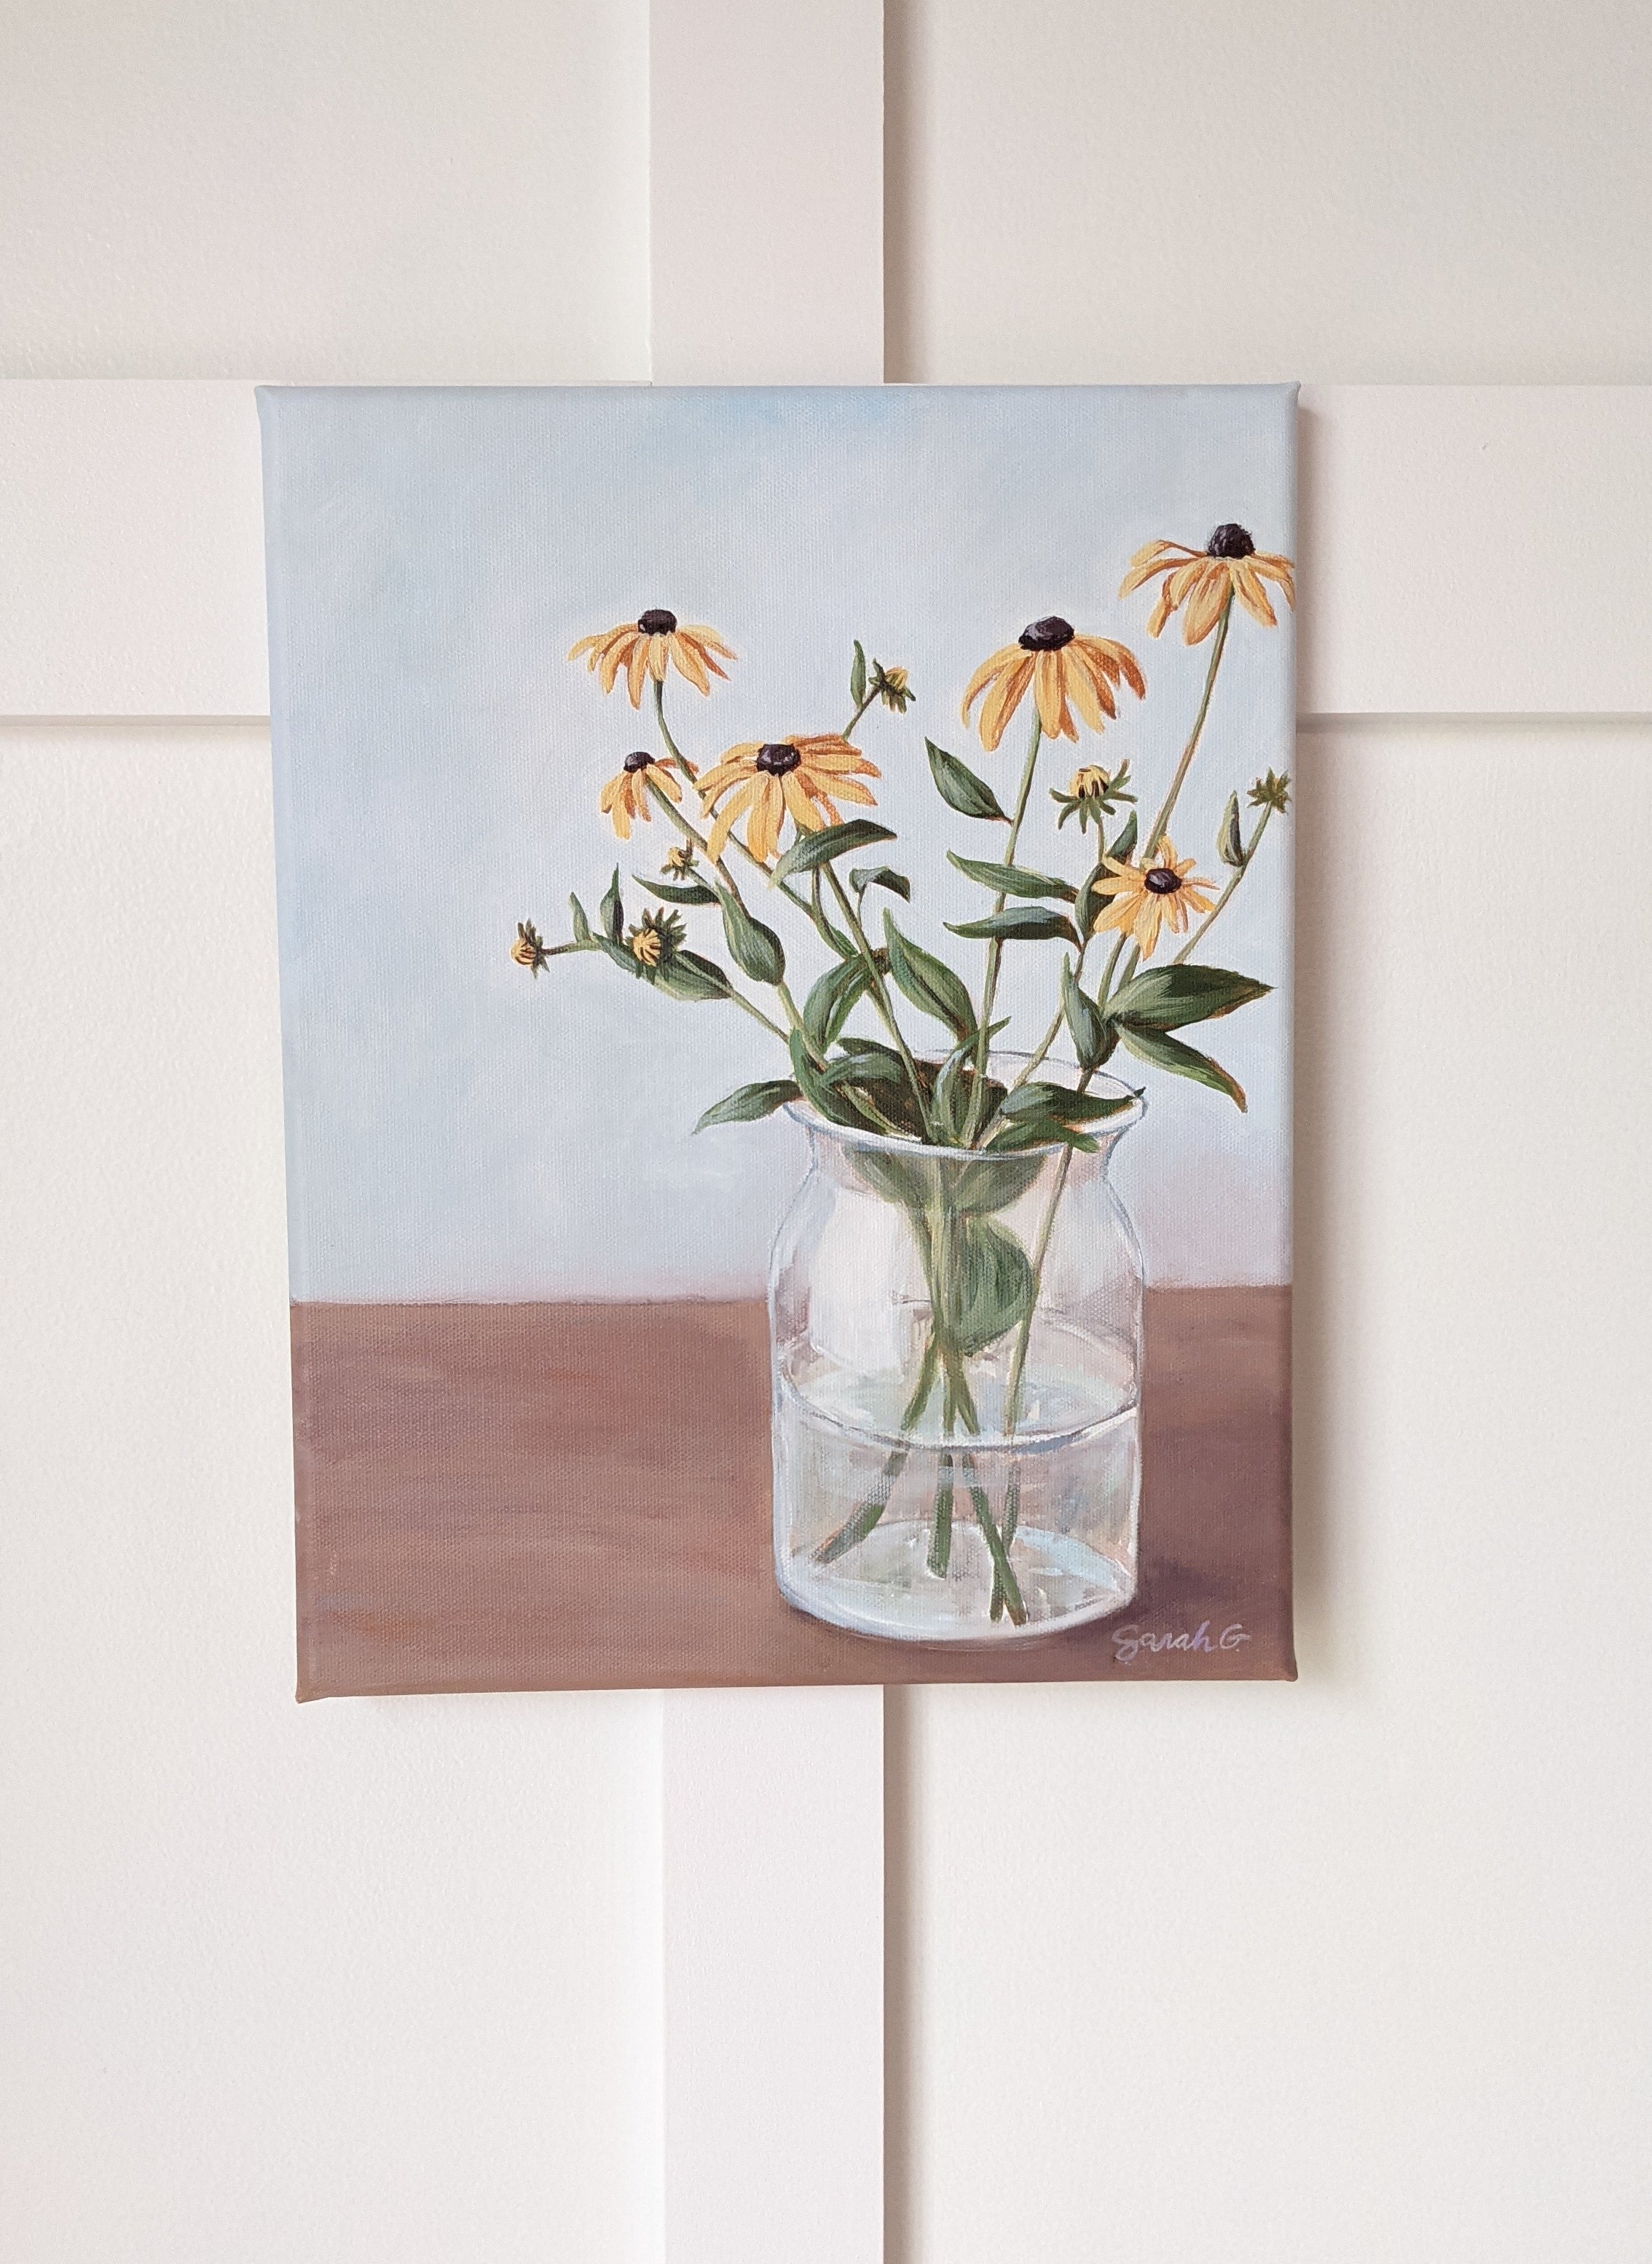 Wildflowers 1  11X14 inch painting on canvas – Sarah Gohman Art & Design